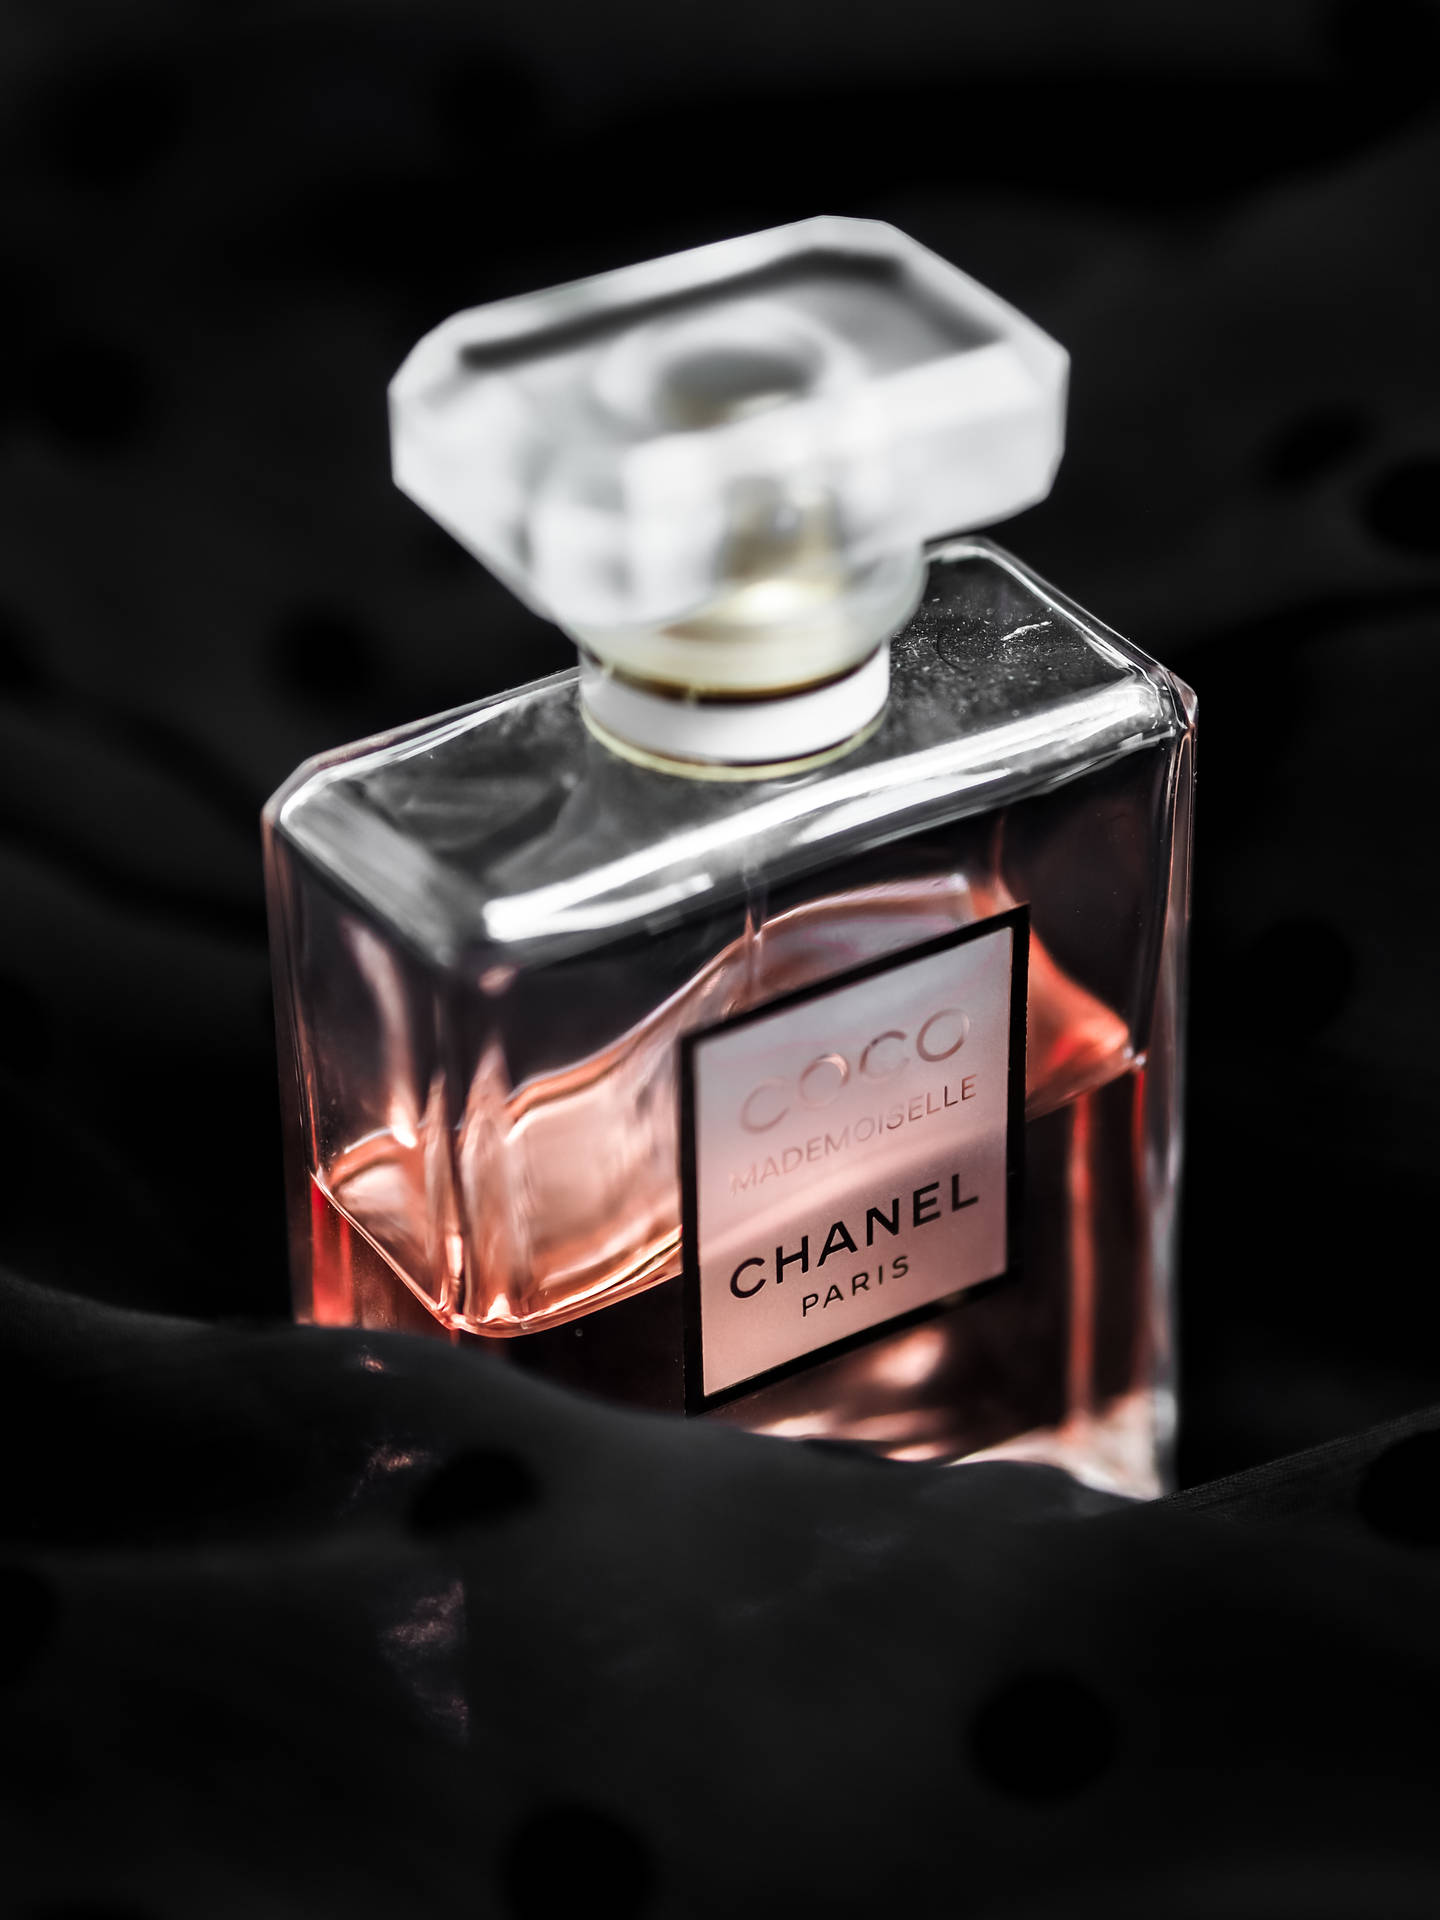 Chanel Coco Mademoiselle Perfume Background